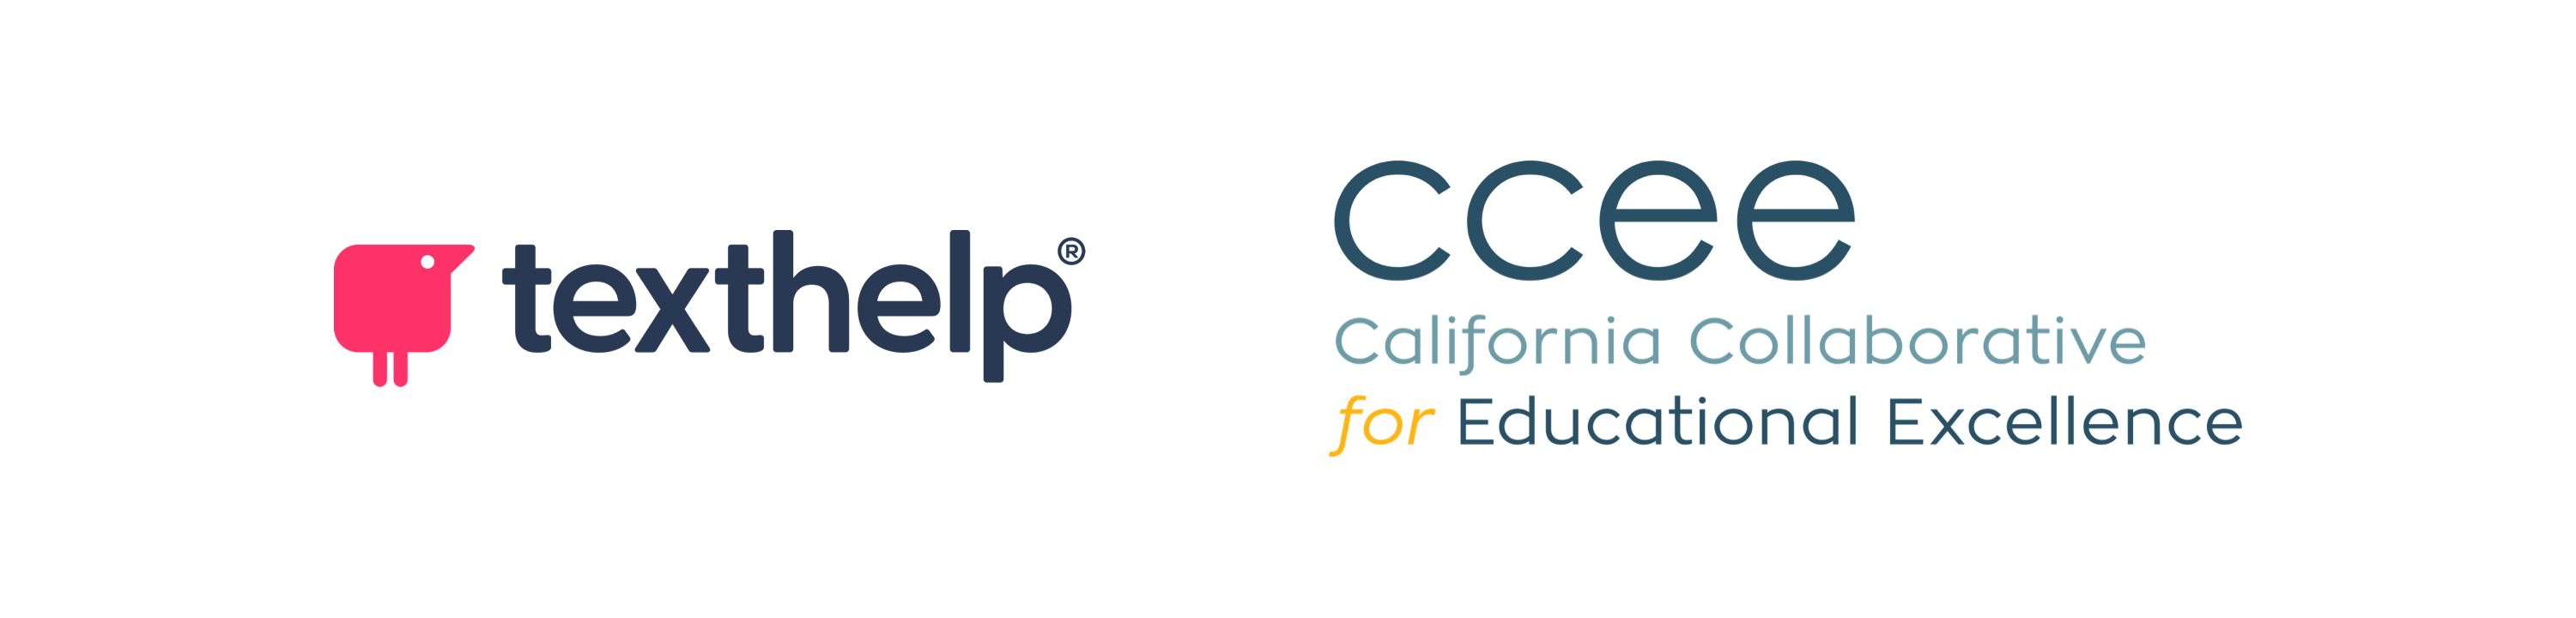 Logos for Texthelp & CCEE - California Collaborative for Education Excellence